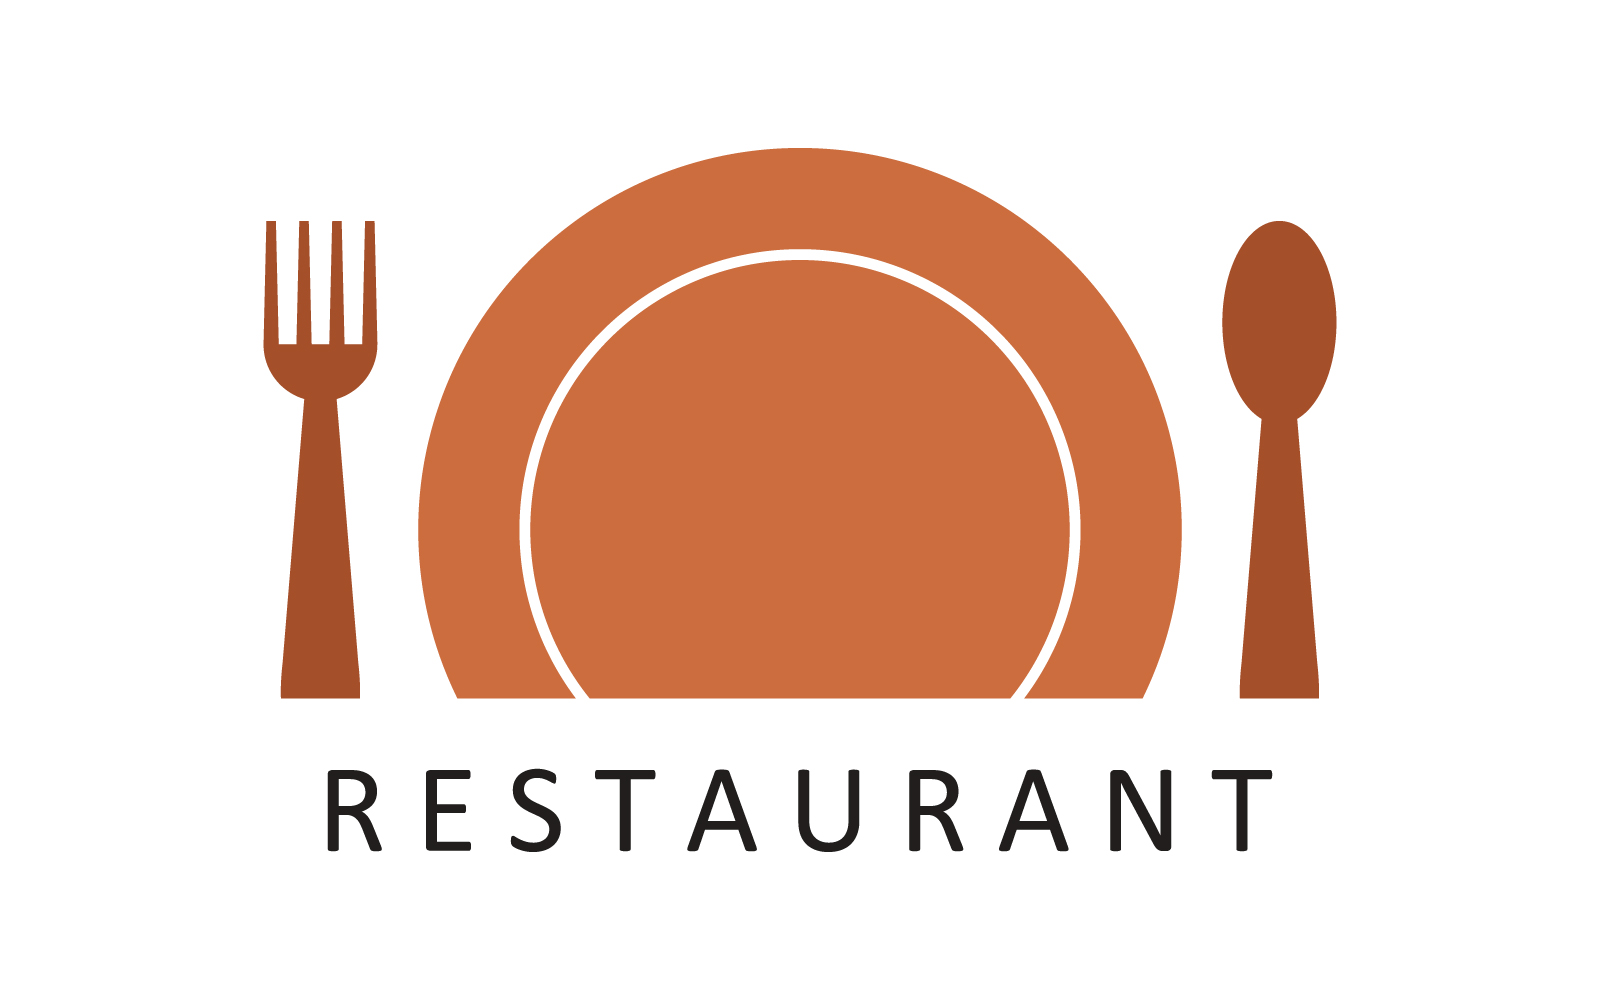 Restaurant logo illustrated on a background